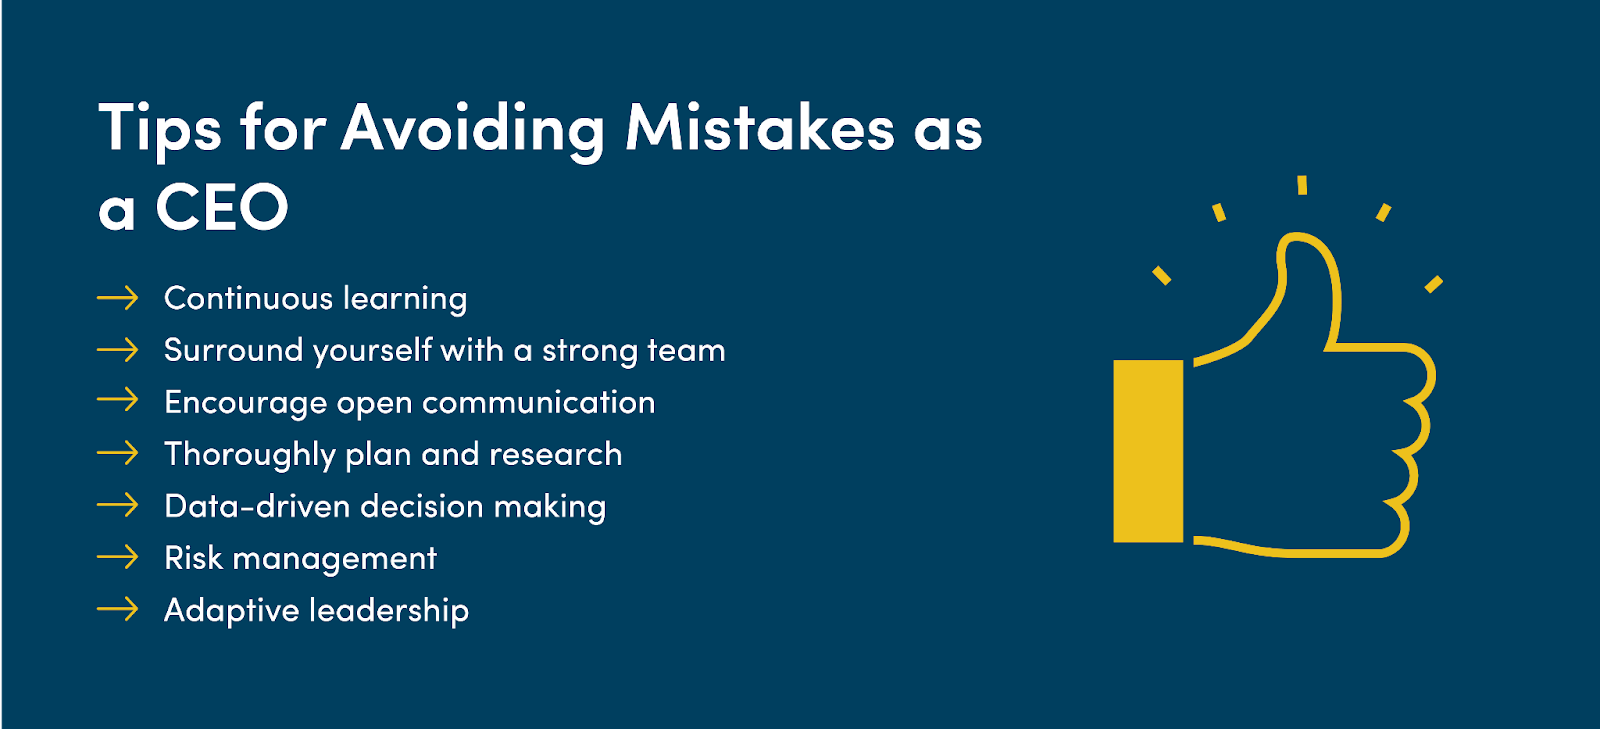 Tips for avoiding mistakes as a CEO